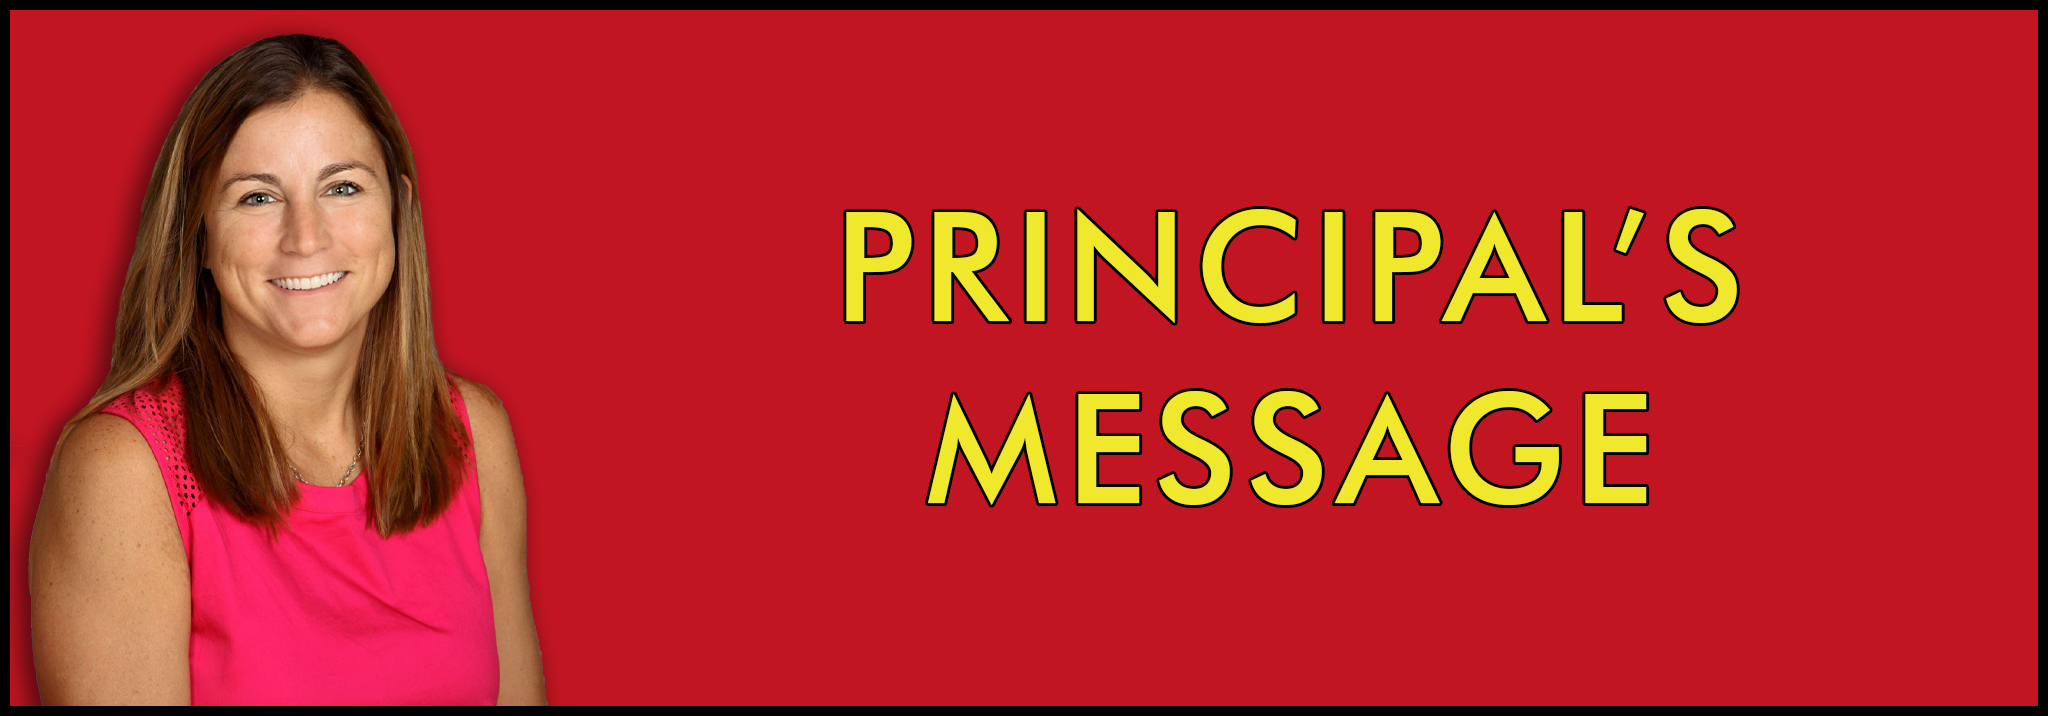 principal message image